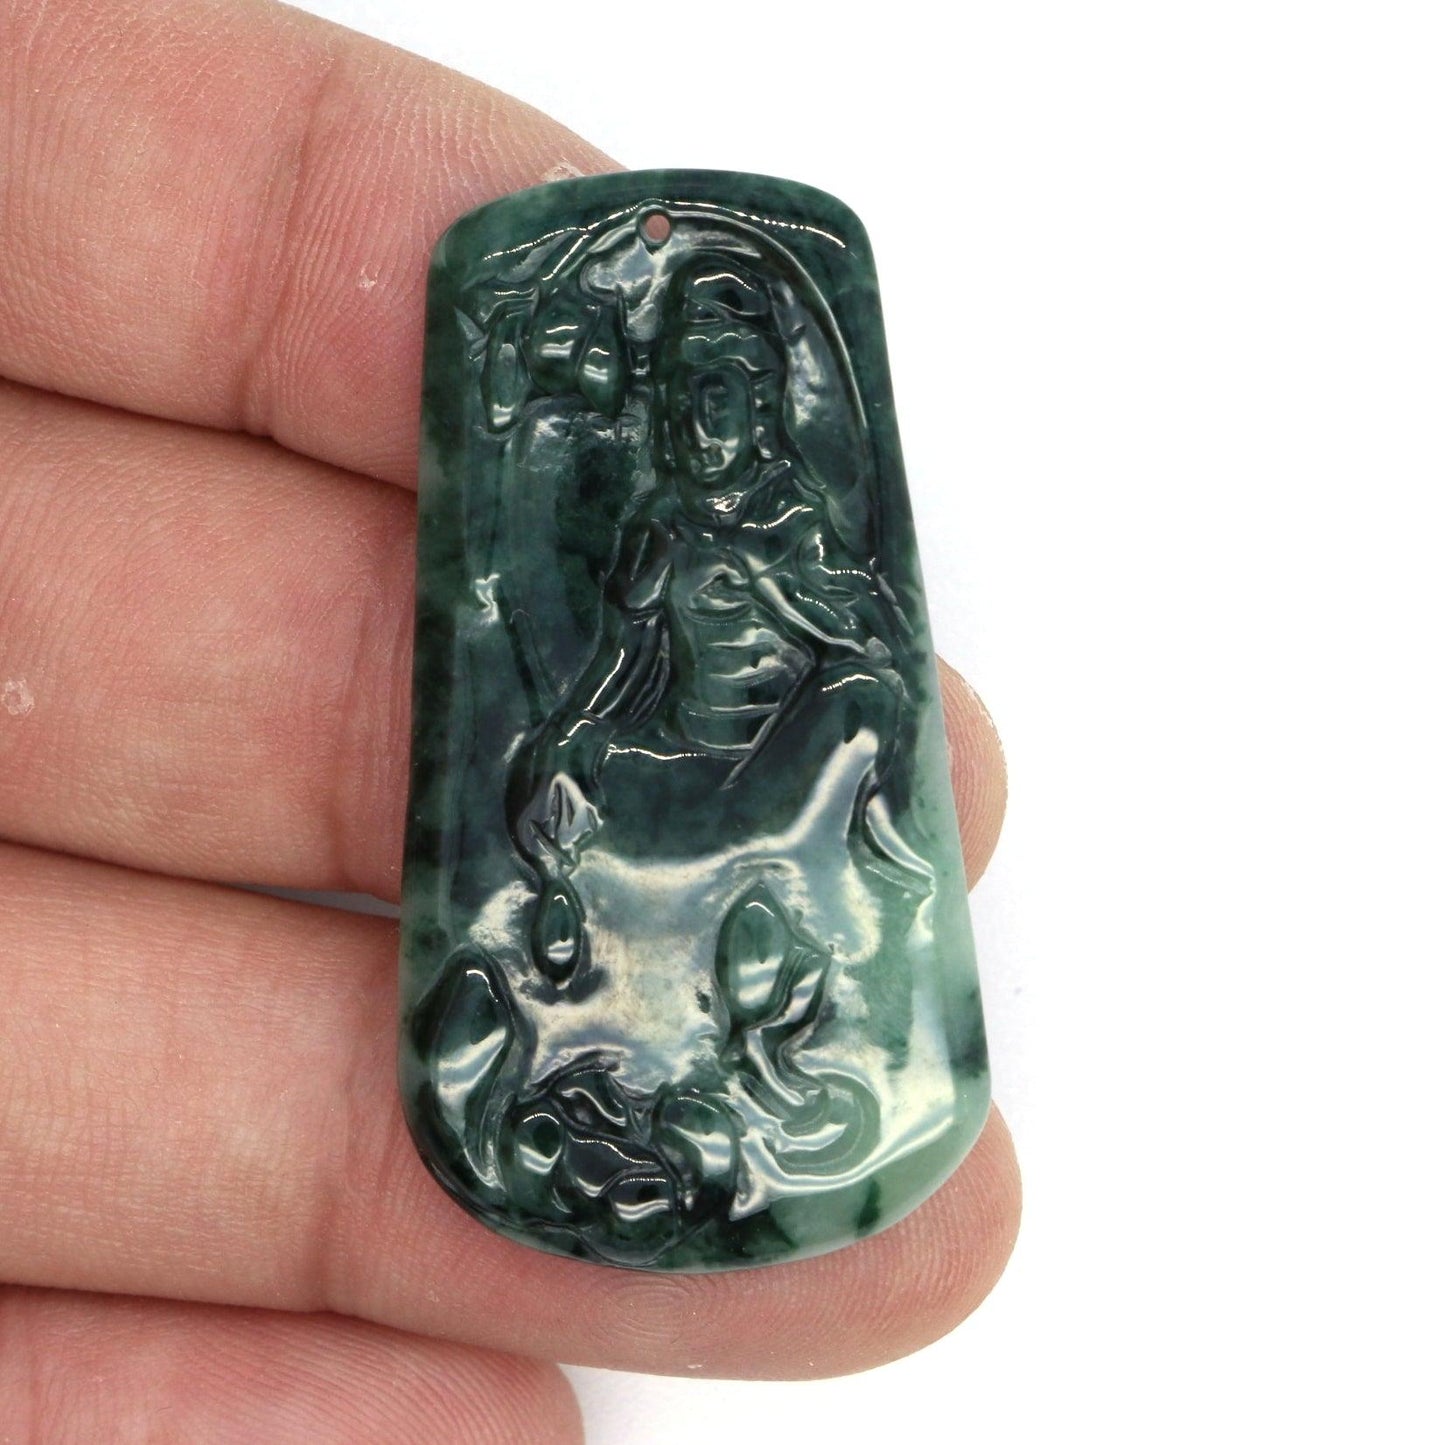 Type A Jadeite Jade Guanyin Pendants Series pe10004 - Jade-collector.com